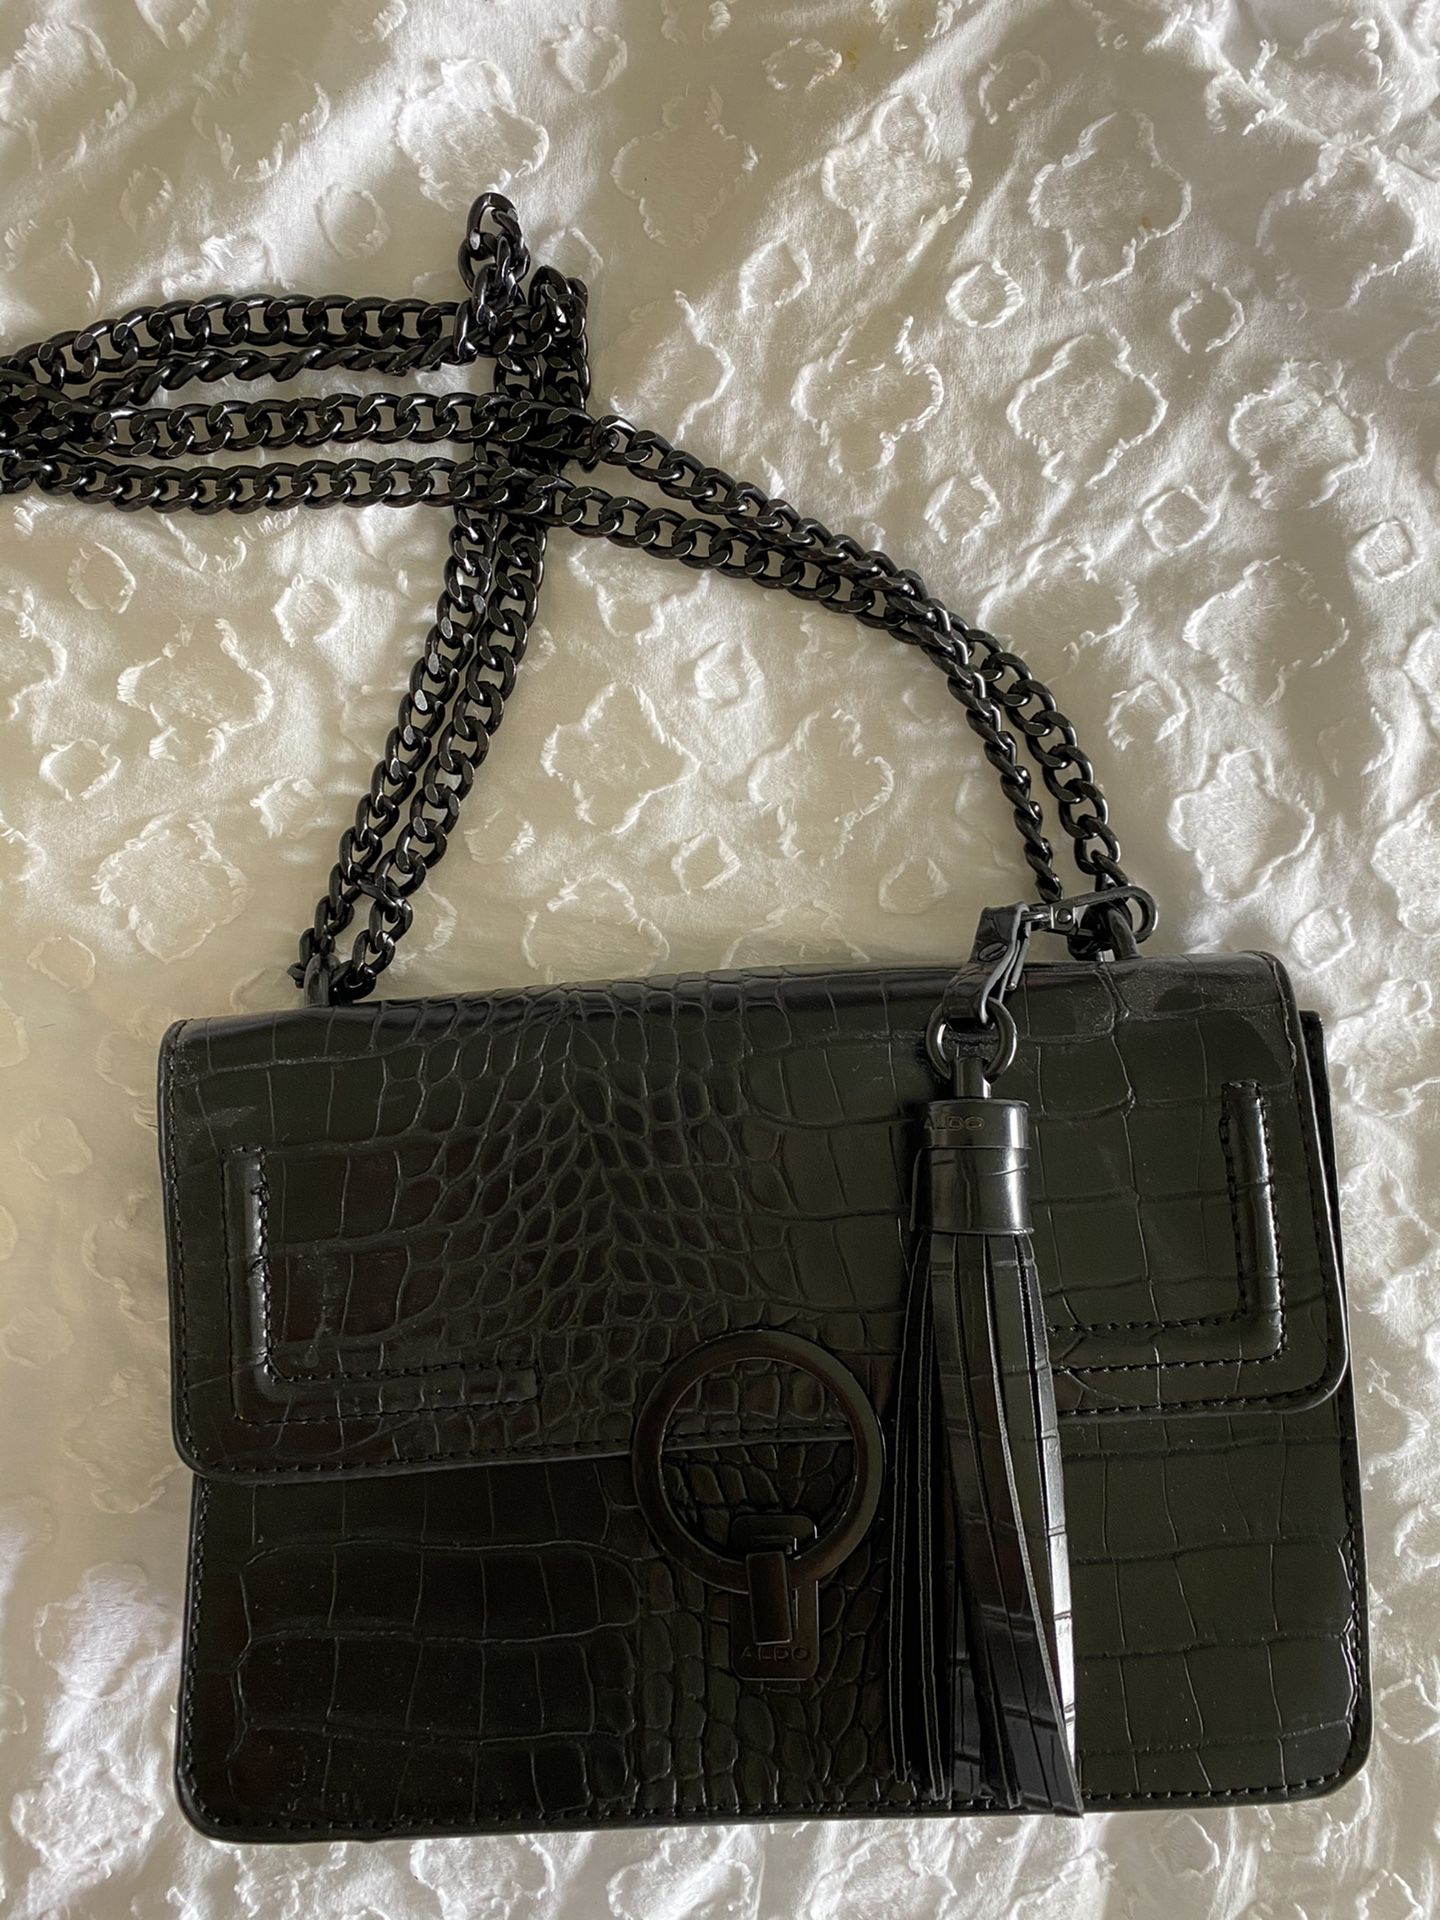 Amazing Bag! Women's purse